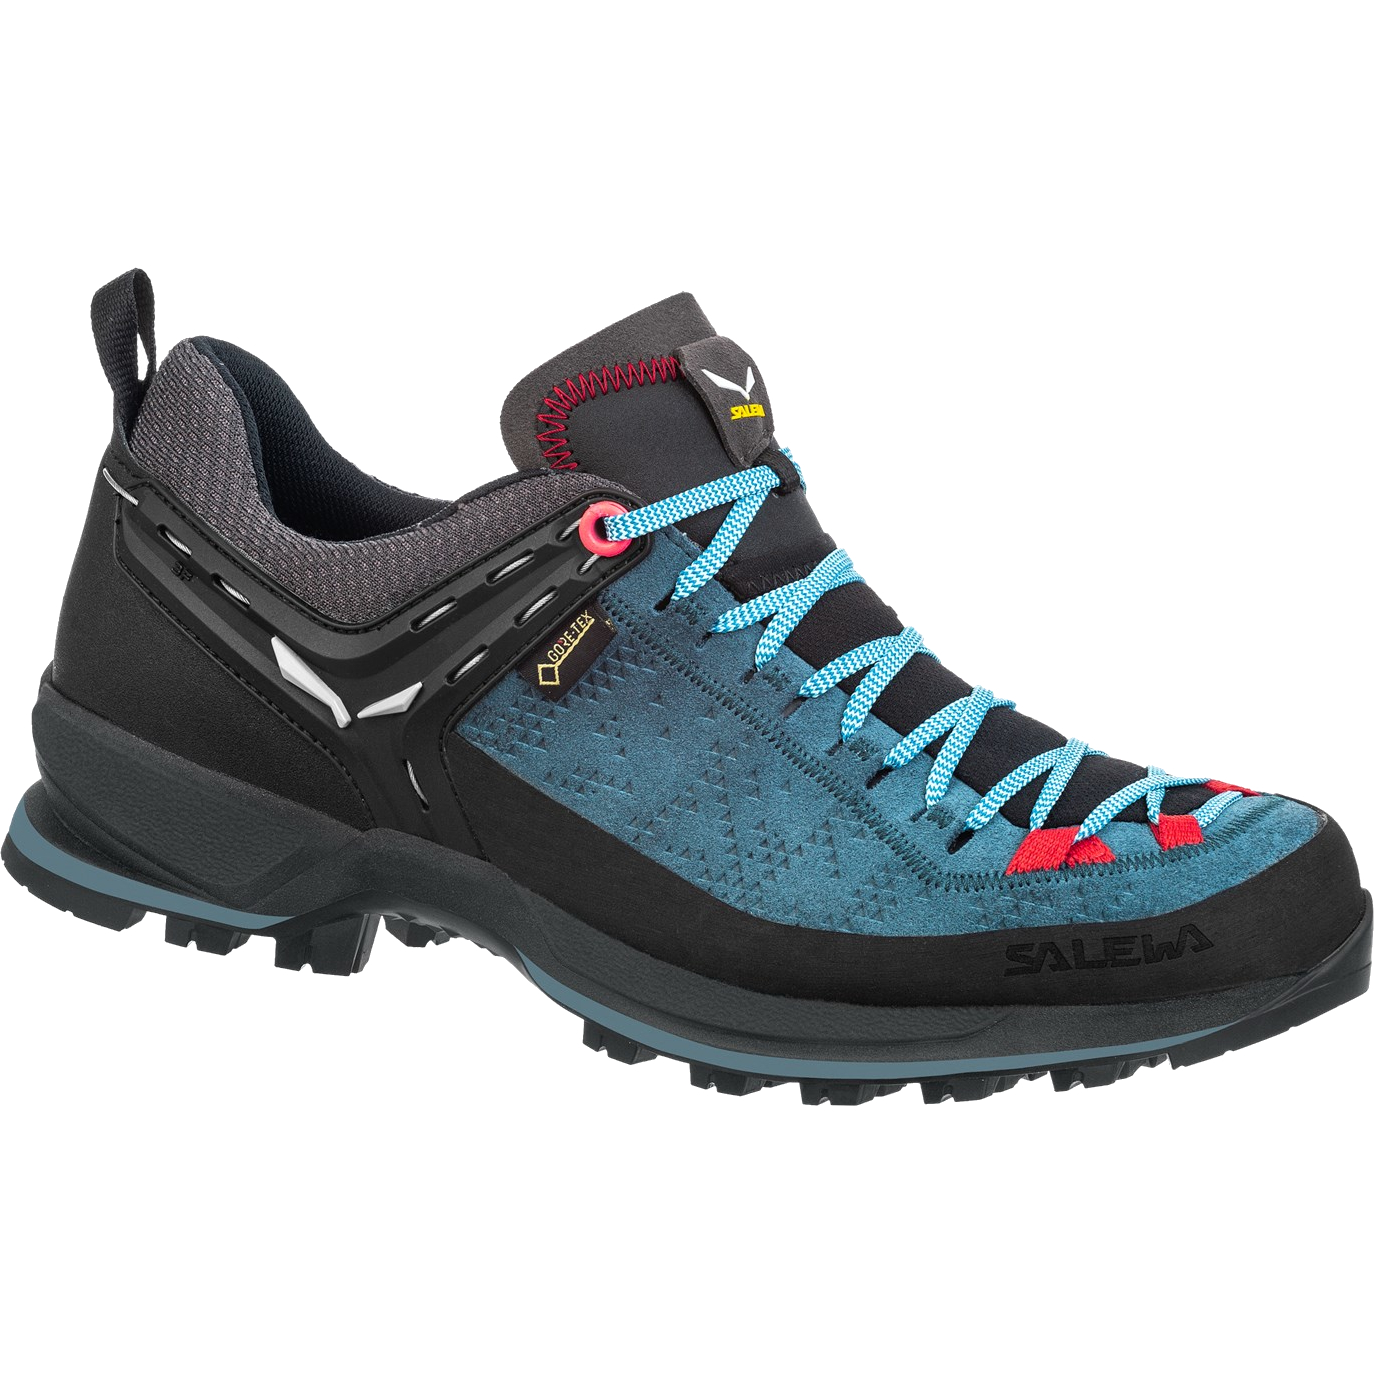 Picture of Salewa Mountain Trainer 2 GTX Hiking Shoes Women - dark denim/fluo coral 8679